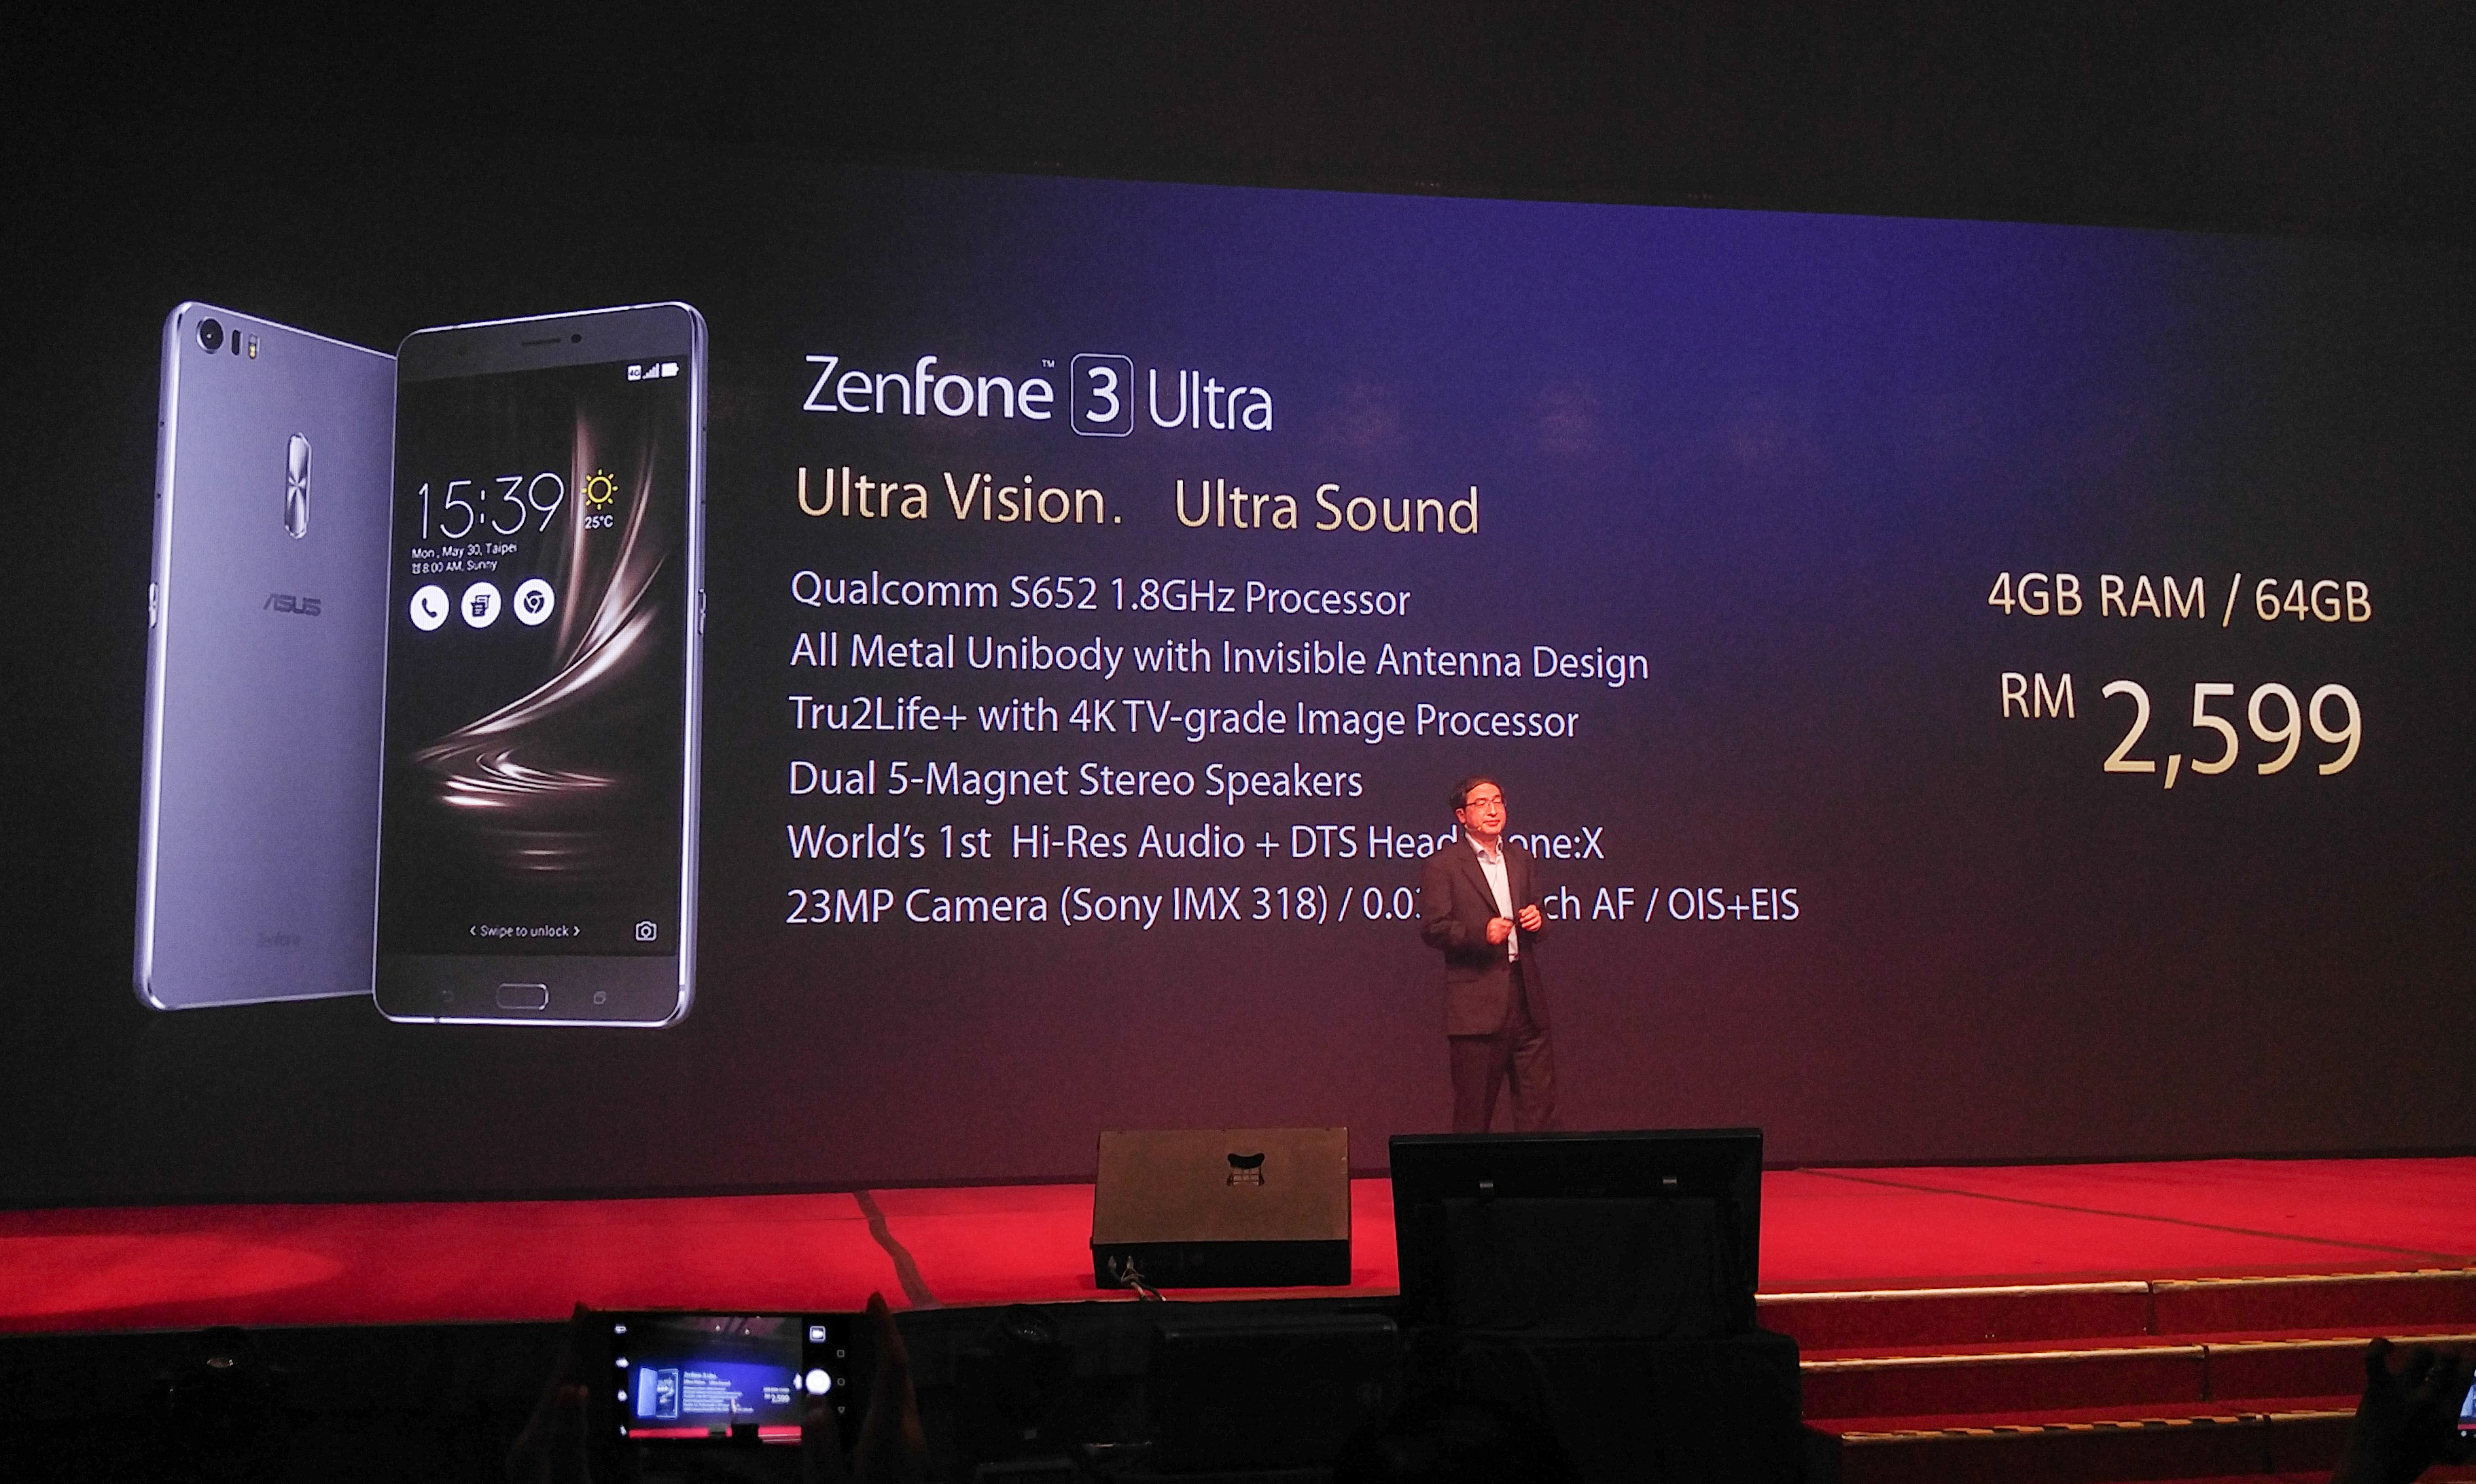 Zenfone 3 Ultra